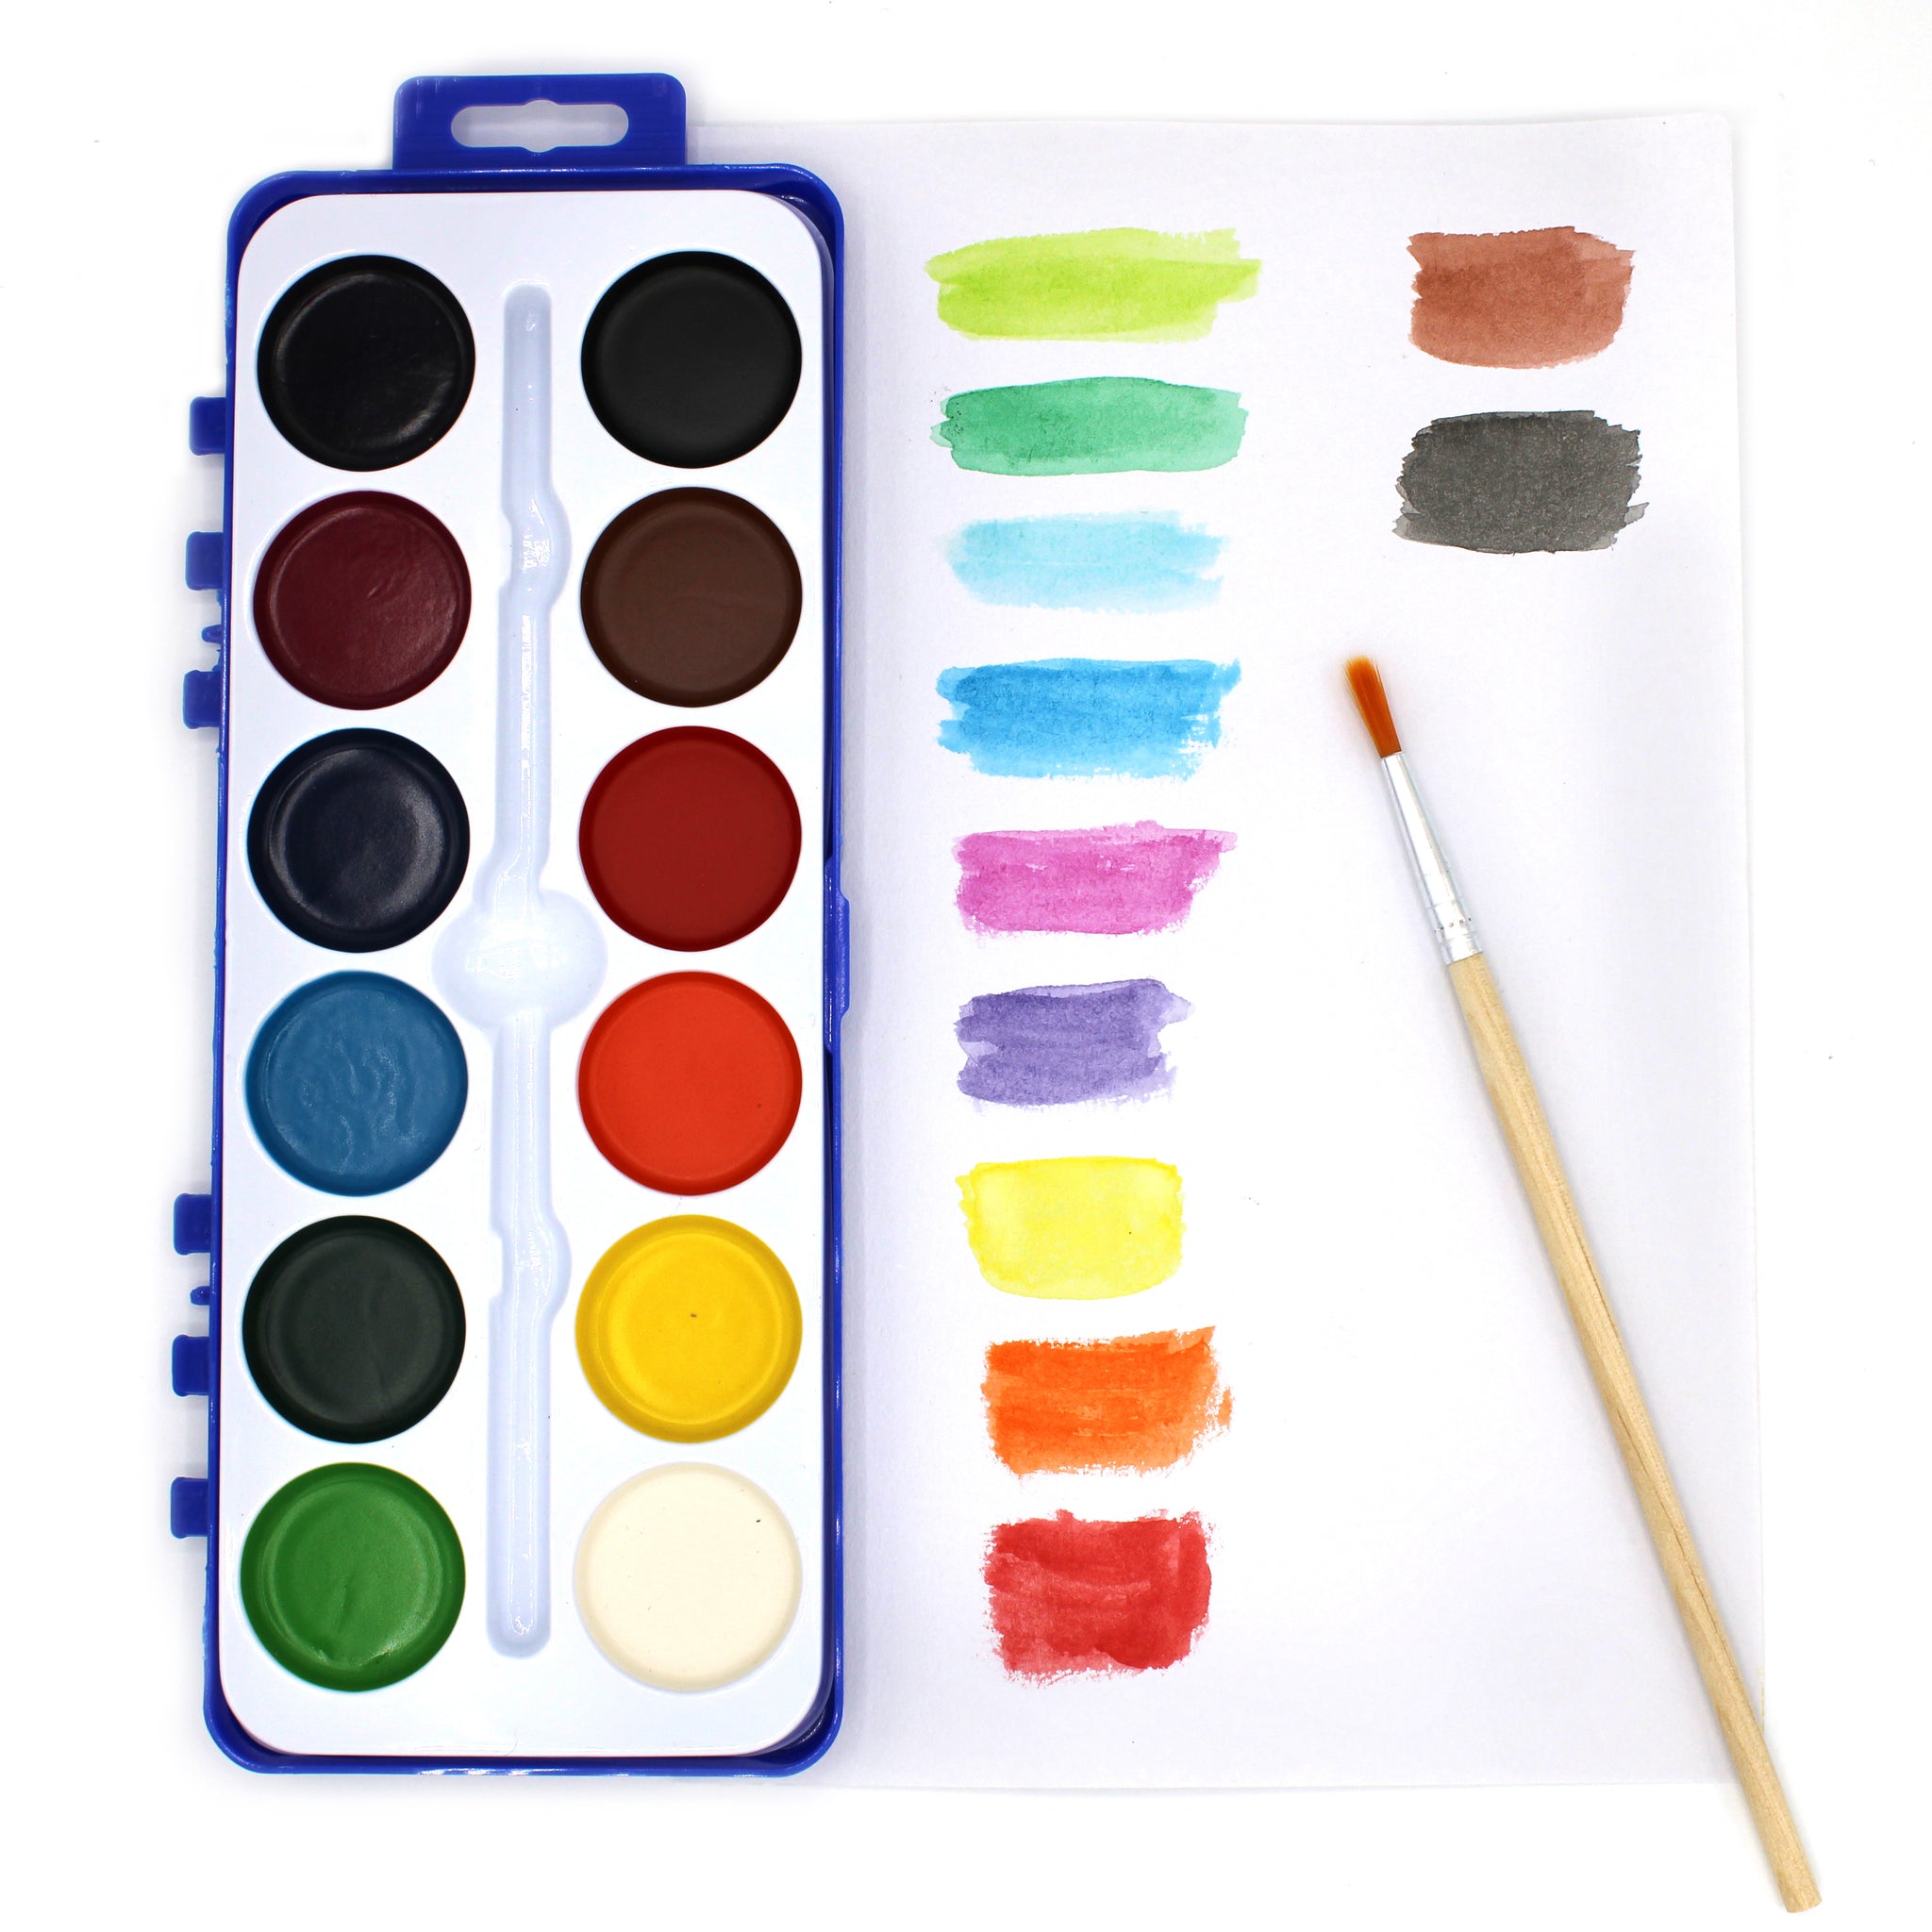 Bulk Watercolor Paint Sets - 16 Colors with Brush